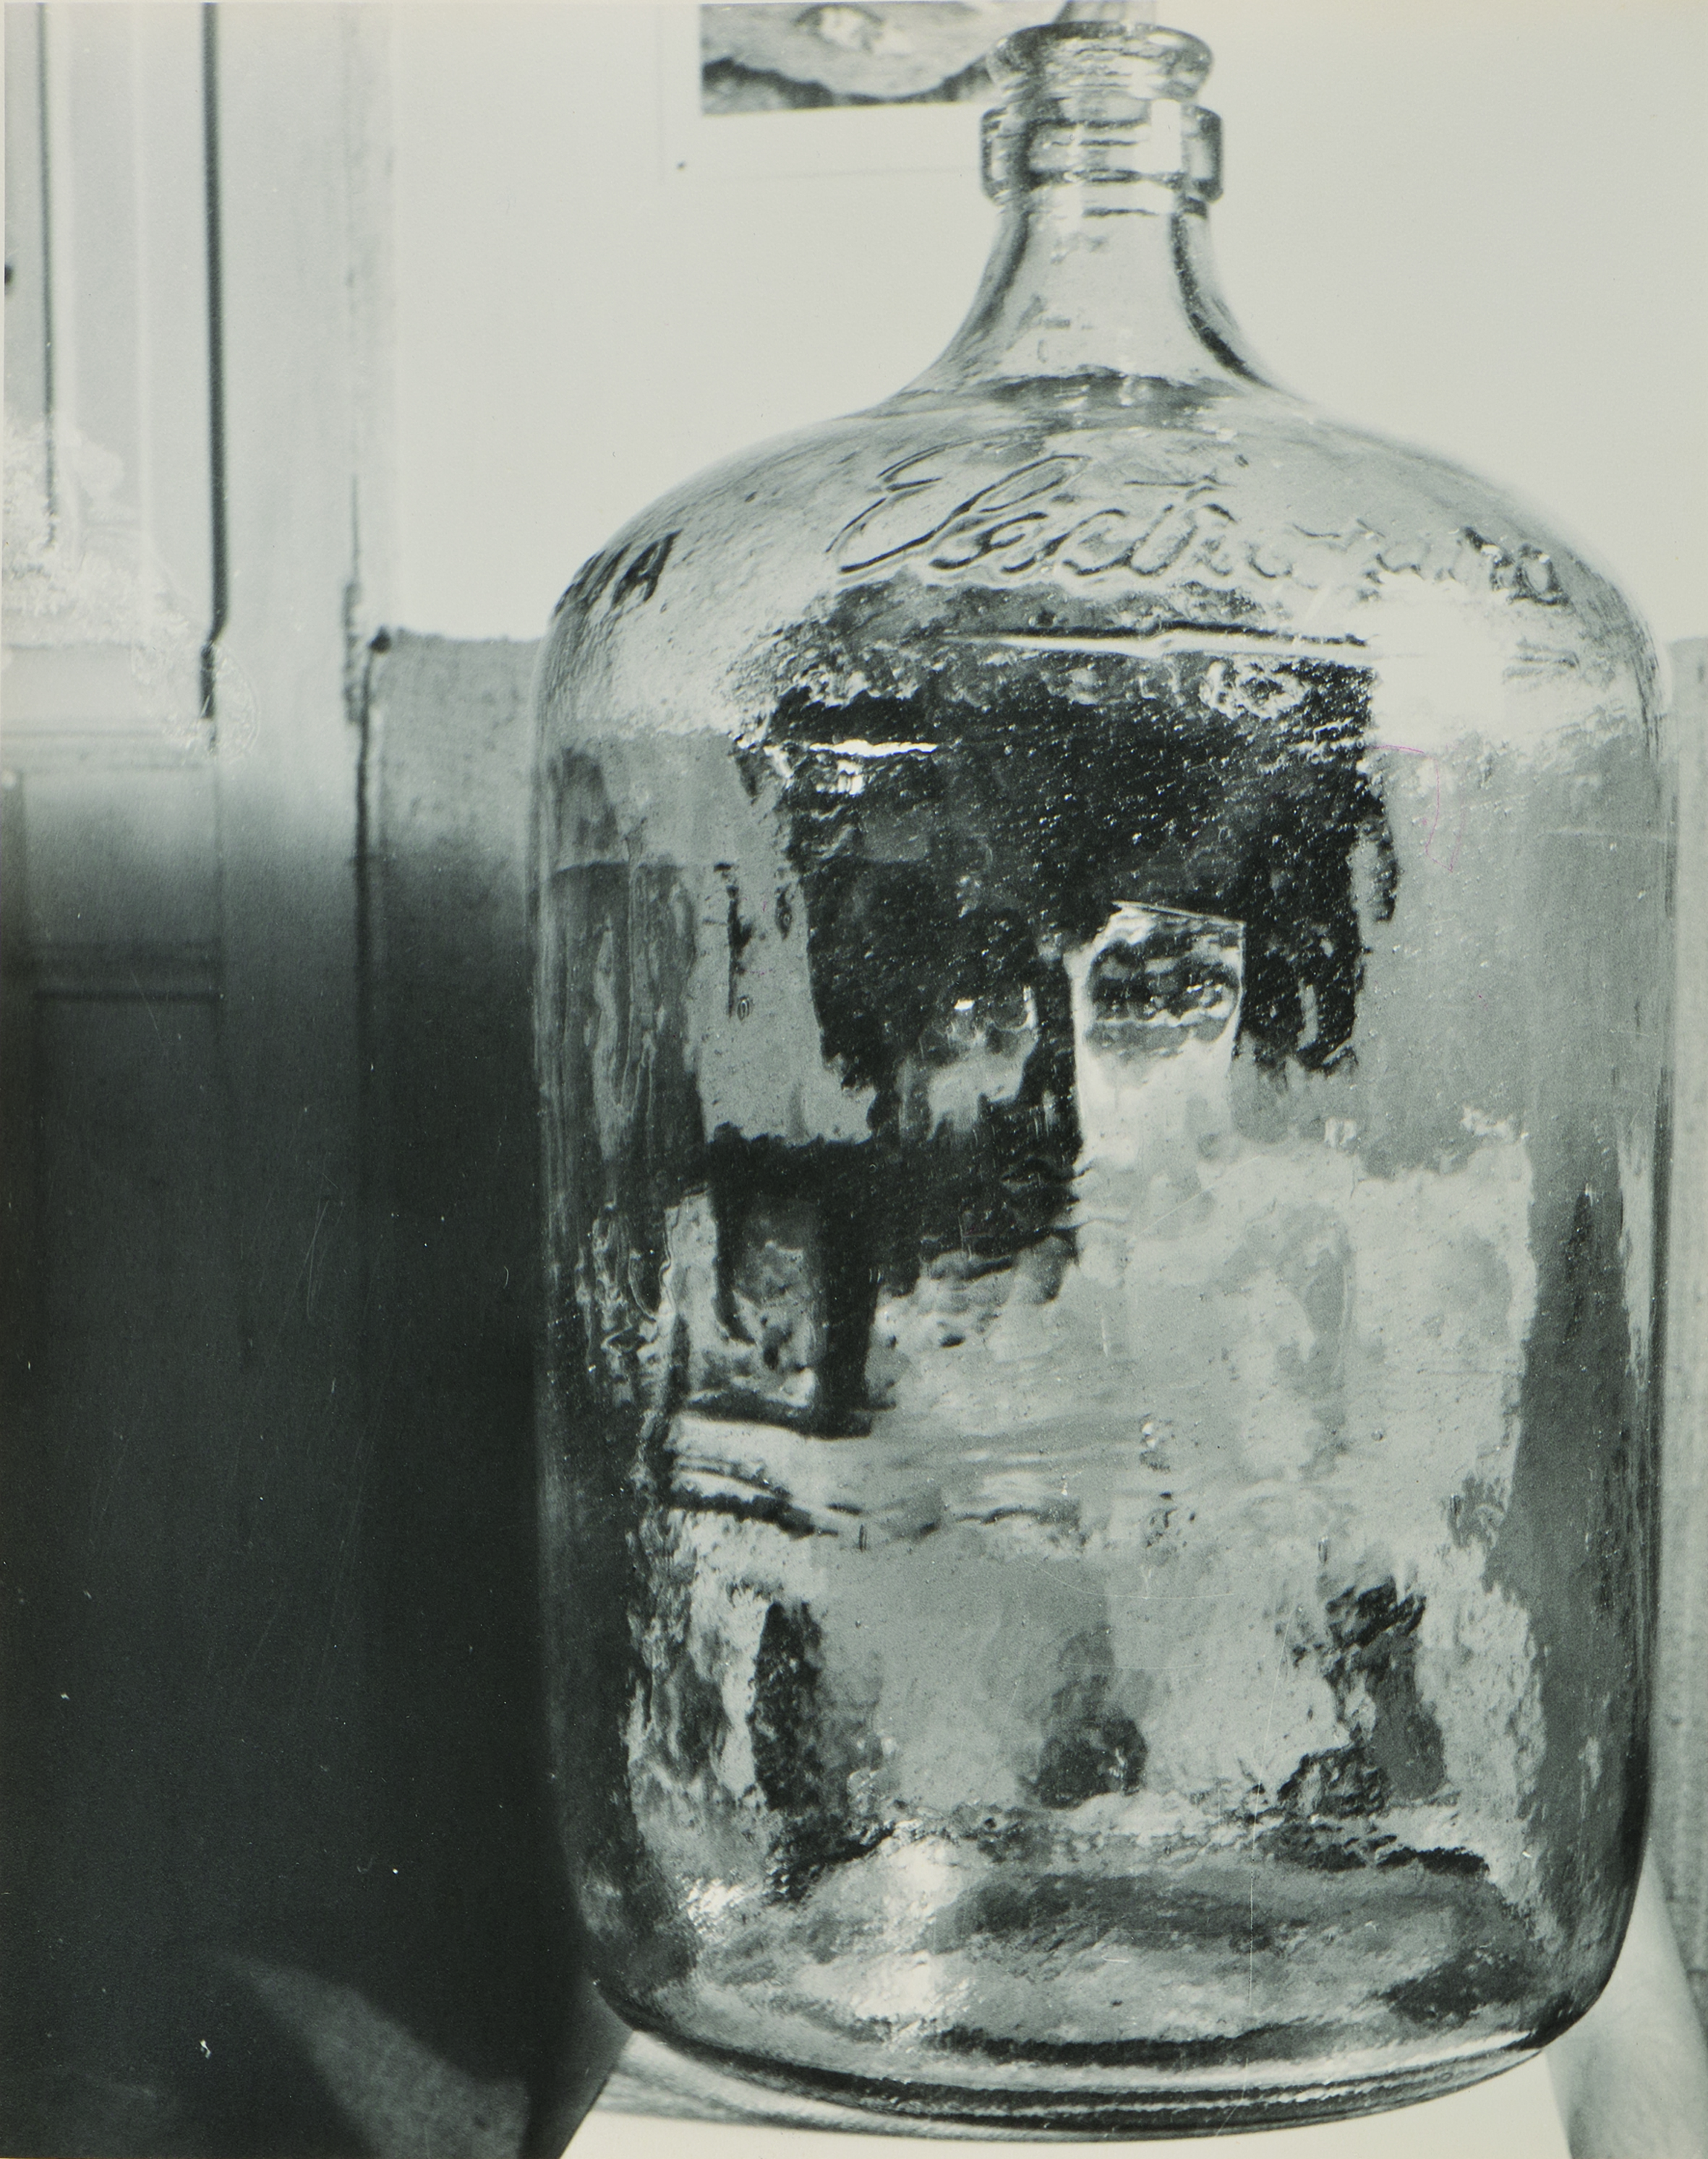 El botellón [The Bottle], Paraísos artificiales series [Artificial Paradises], Mexico, 1962